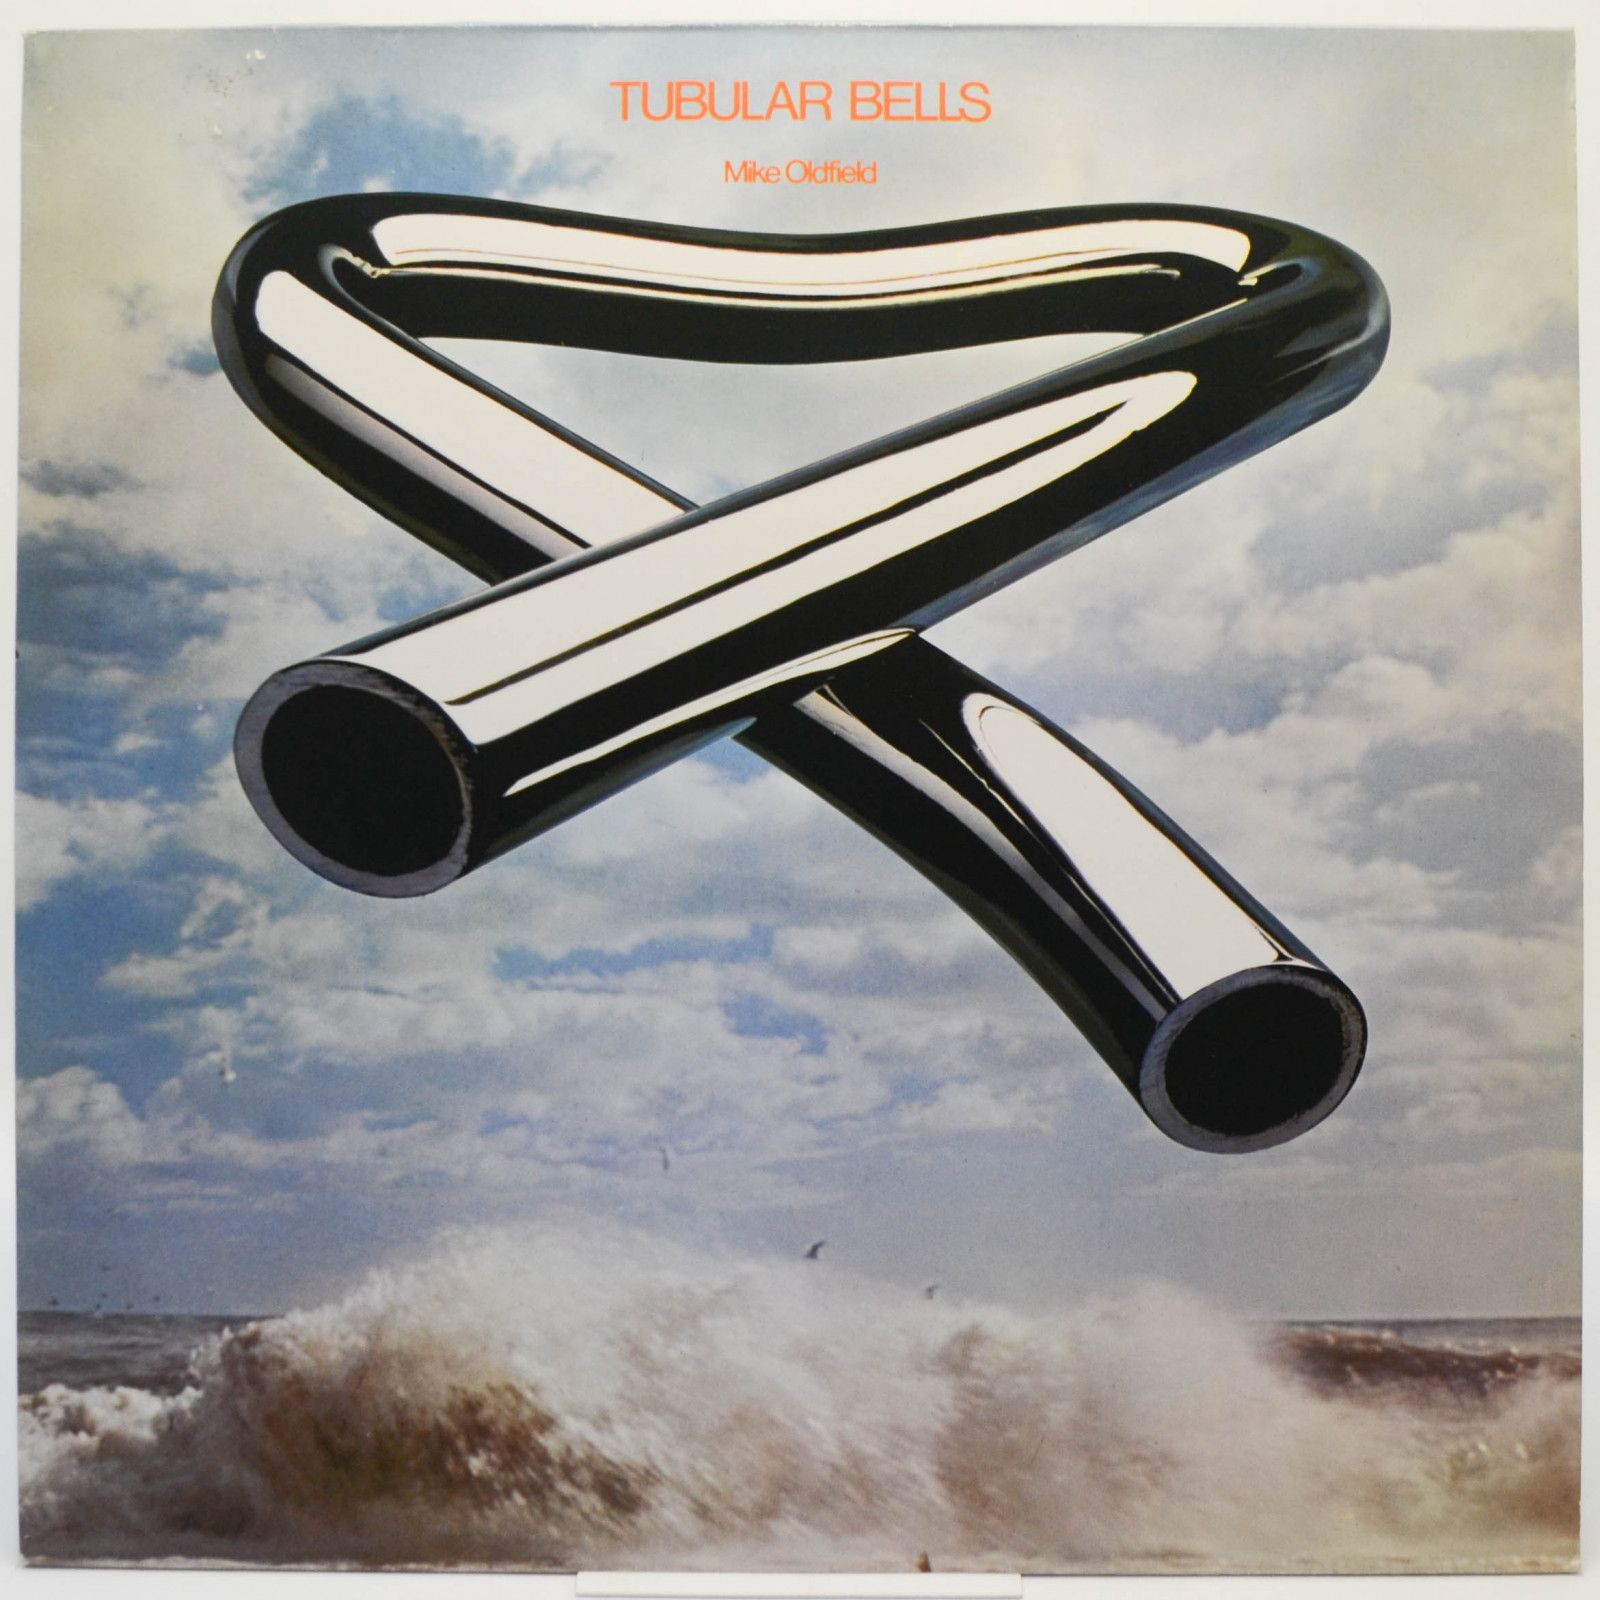 Mike Oldfield — Tubular Bells, 1973